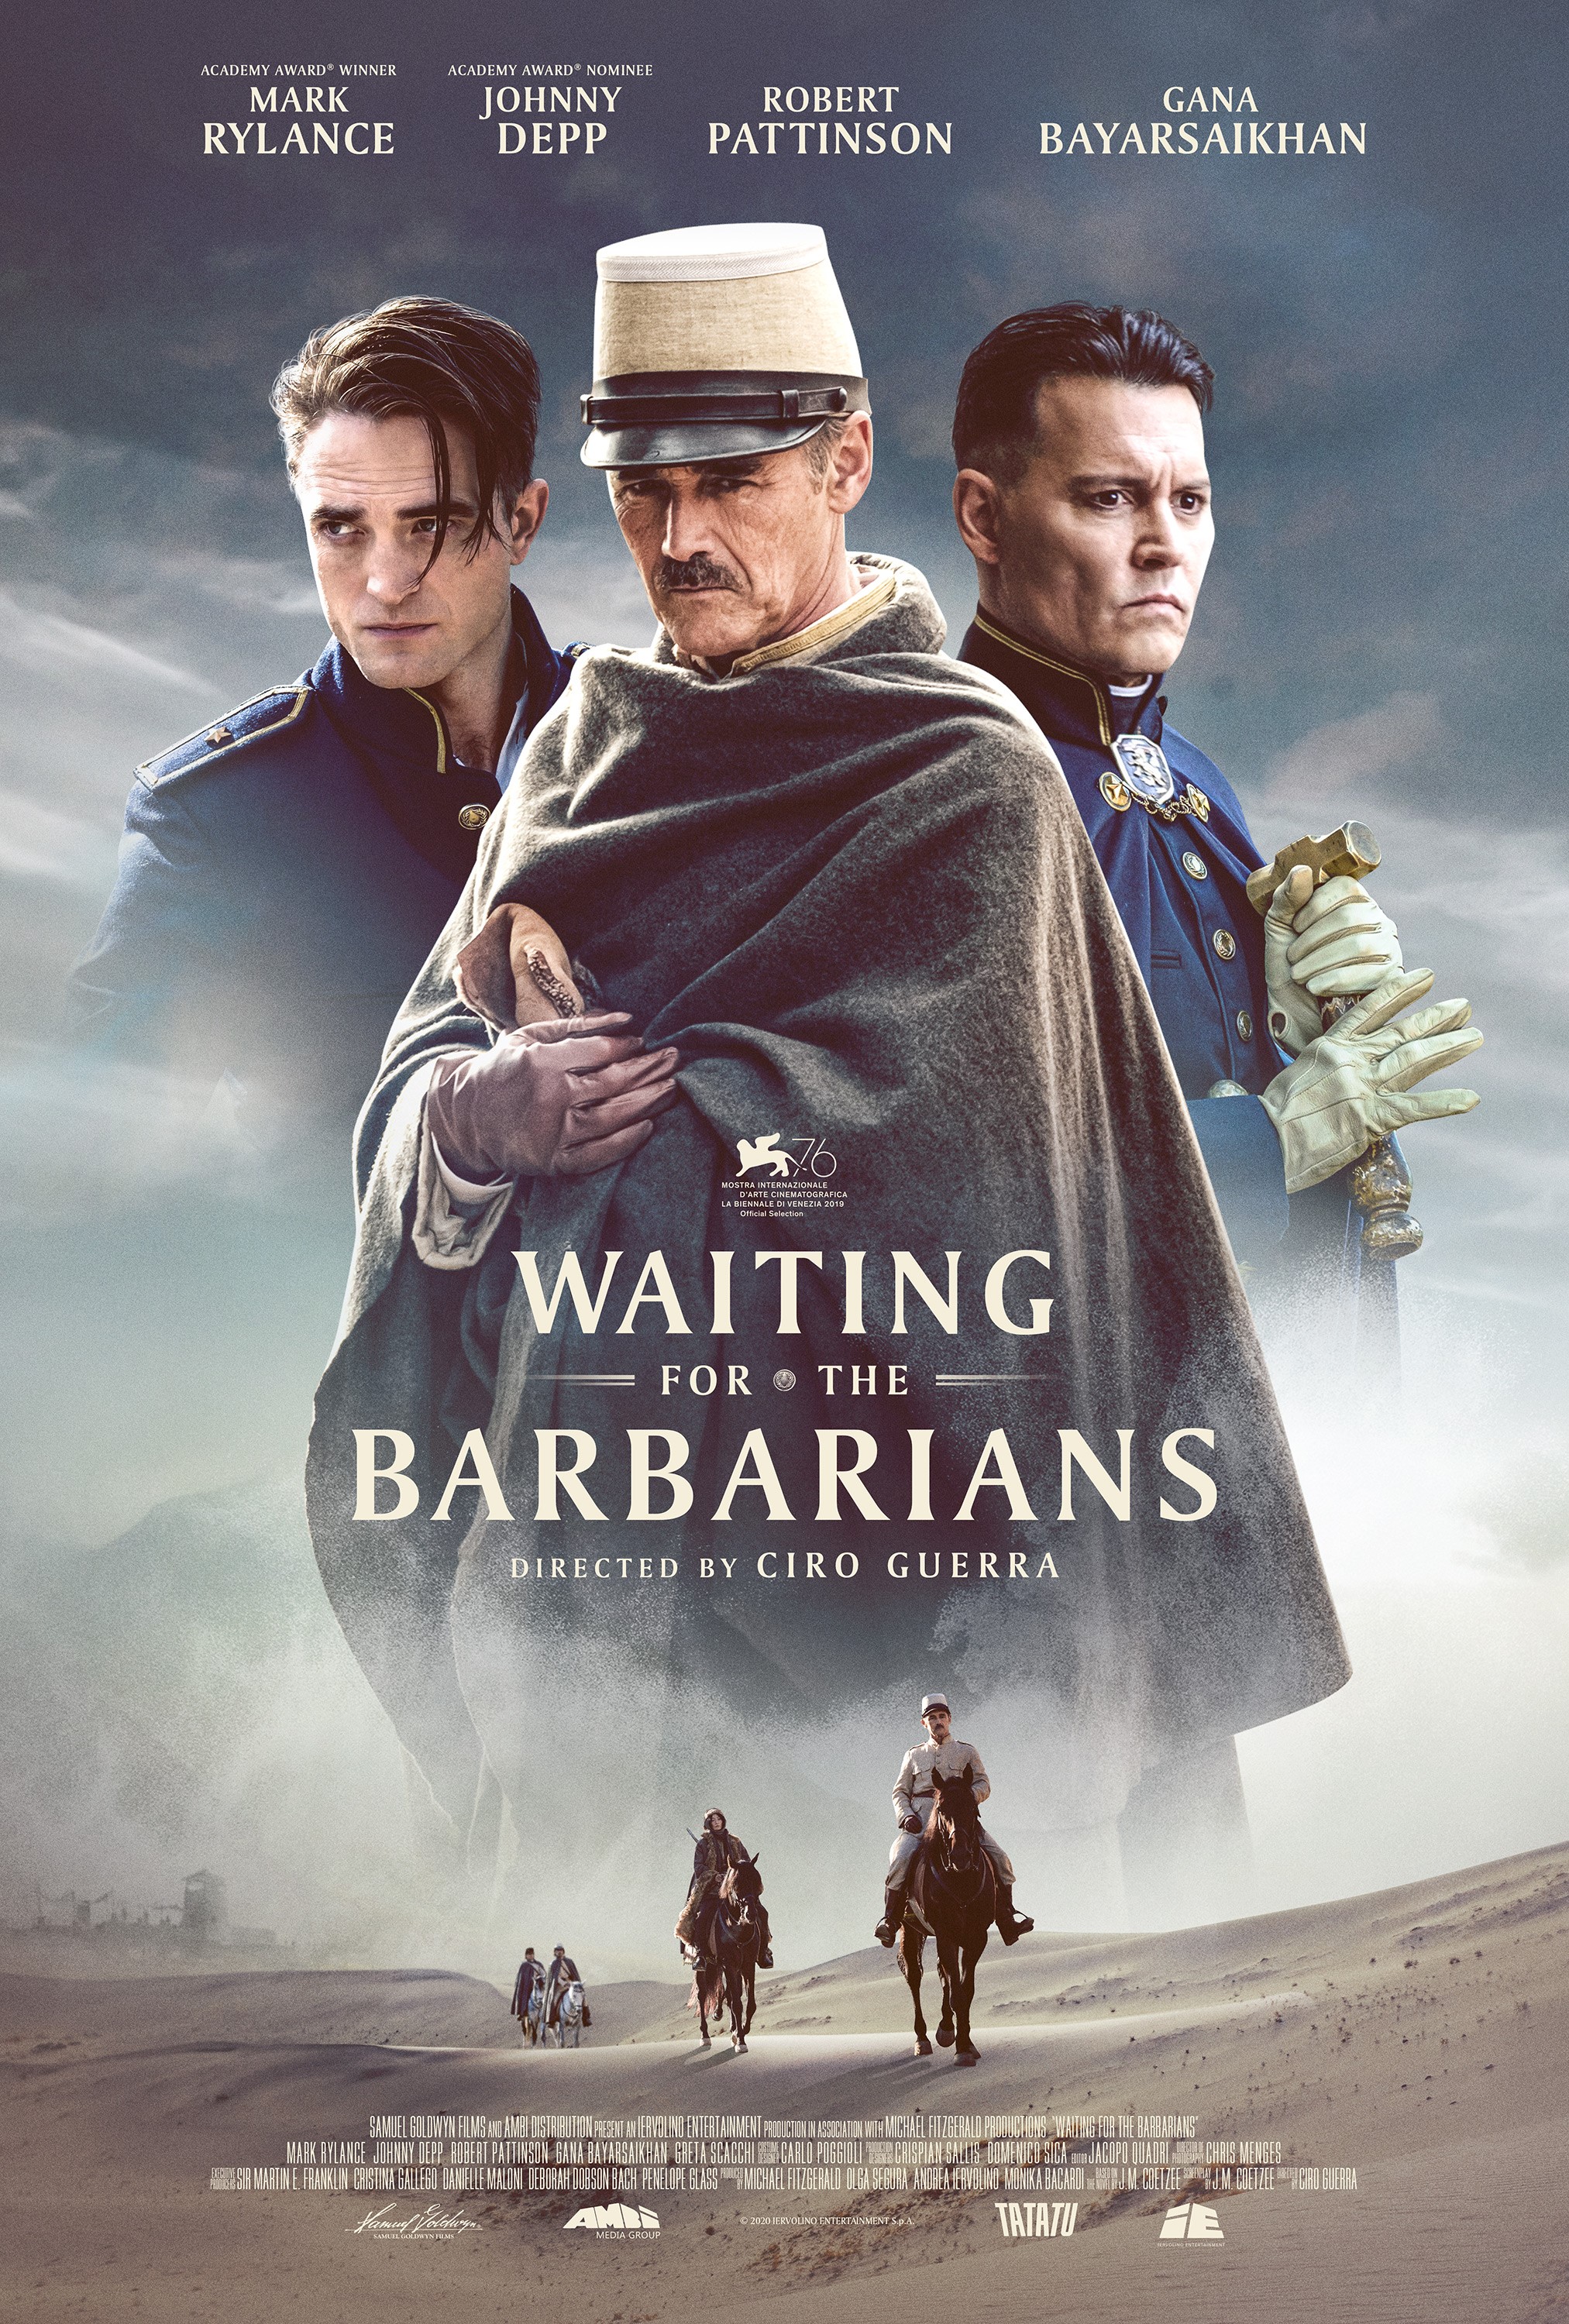 Nonton film Waiting for the Barbarians layarkaca21 indoxx1 ganool online streaming terbaru